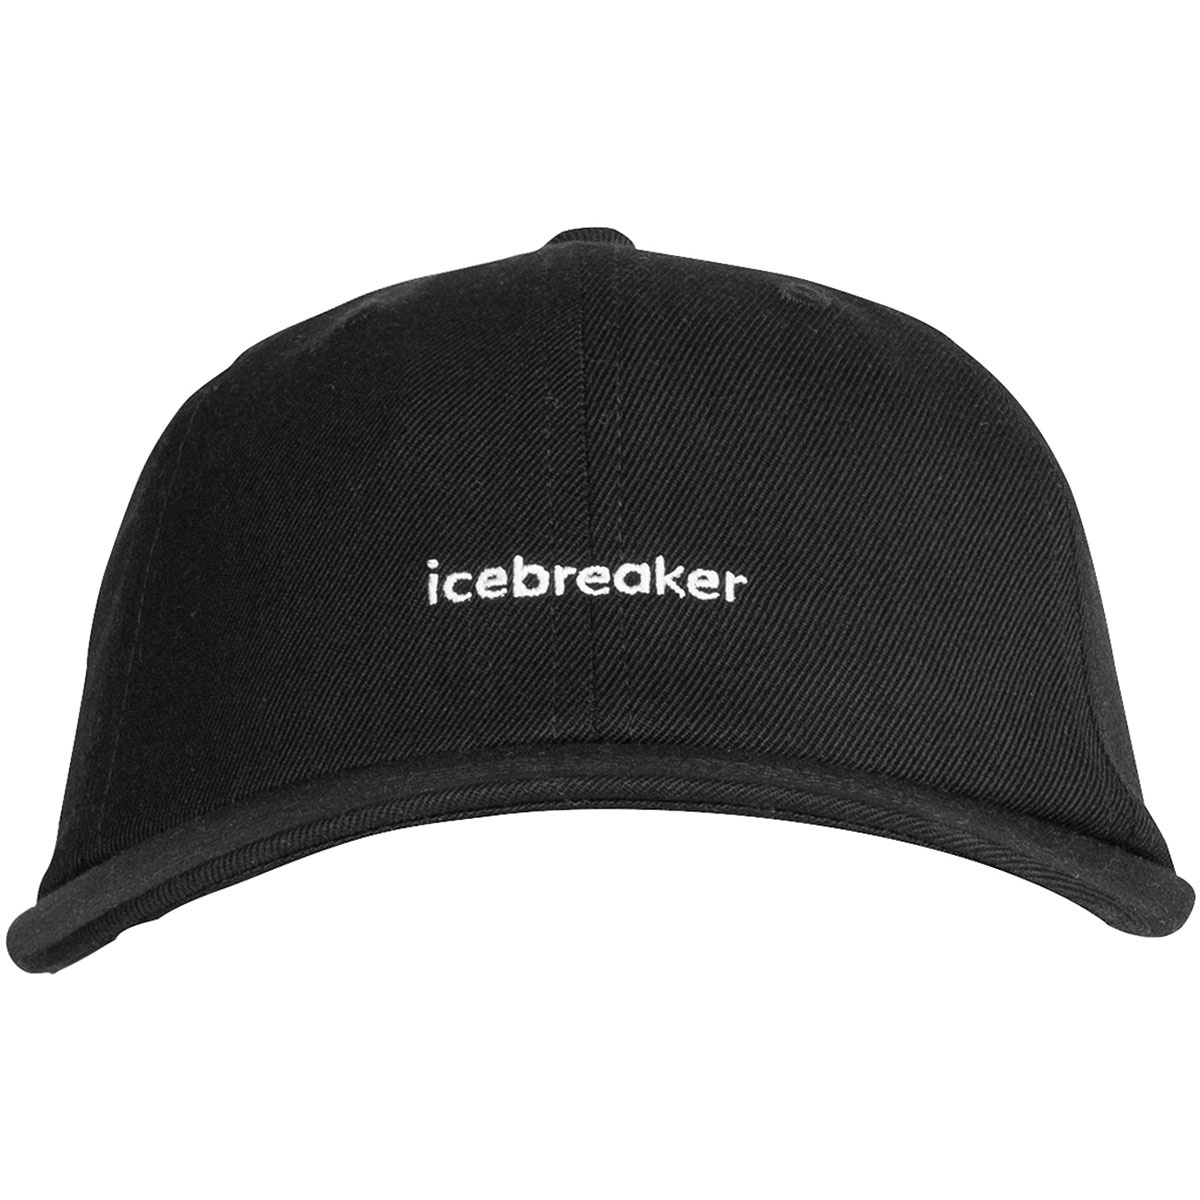 Icebreaker 6 Panel Cap von Icebreaker